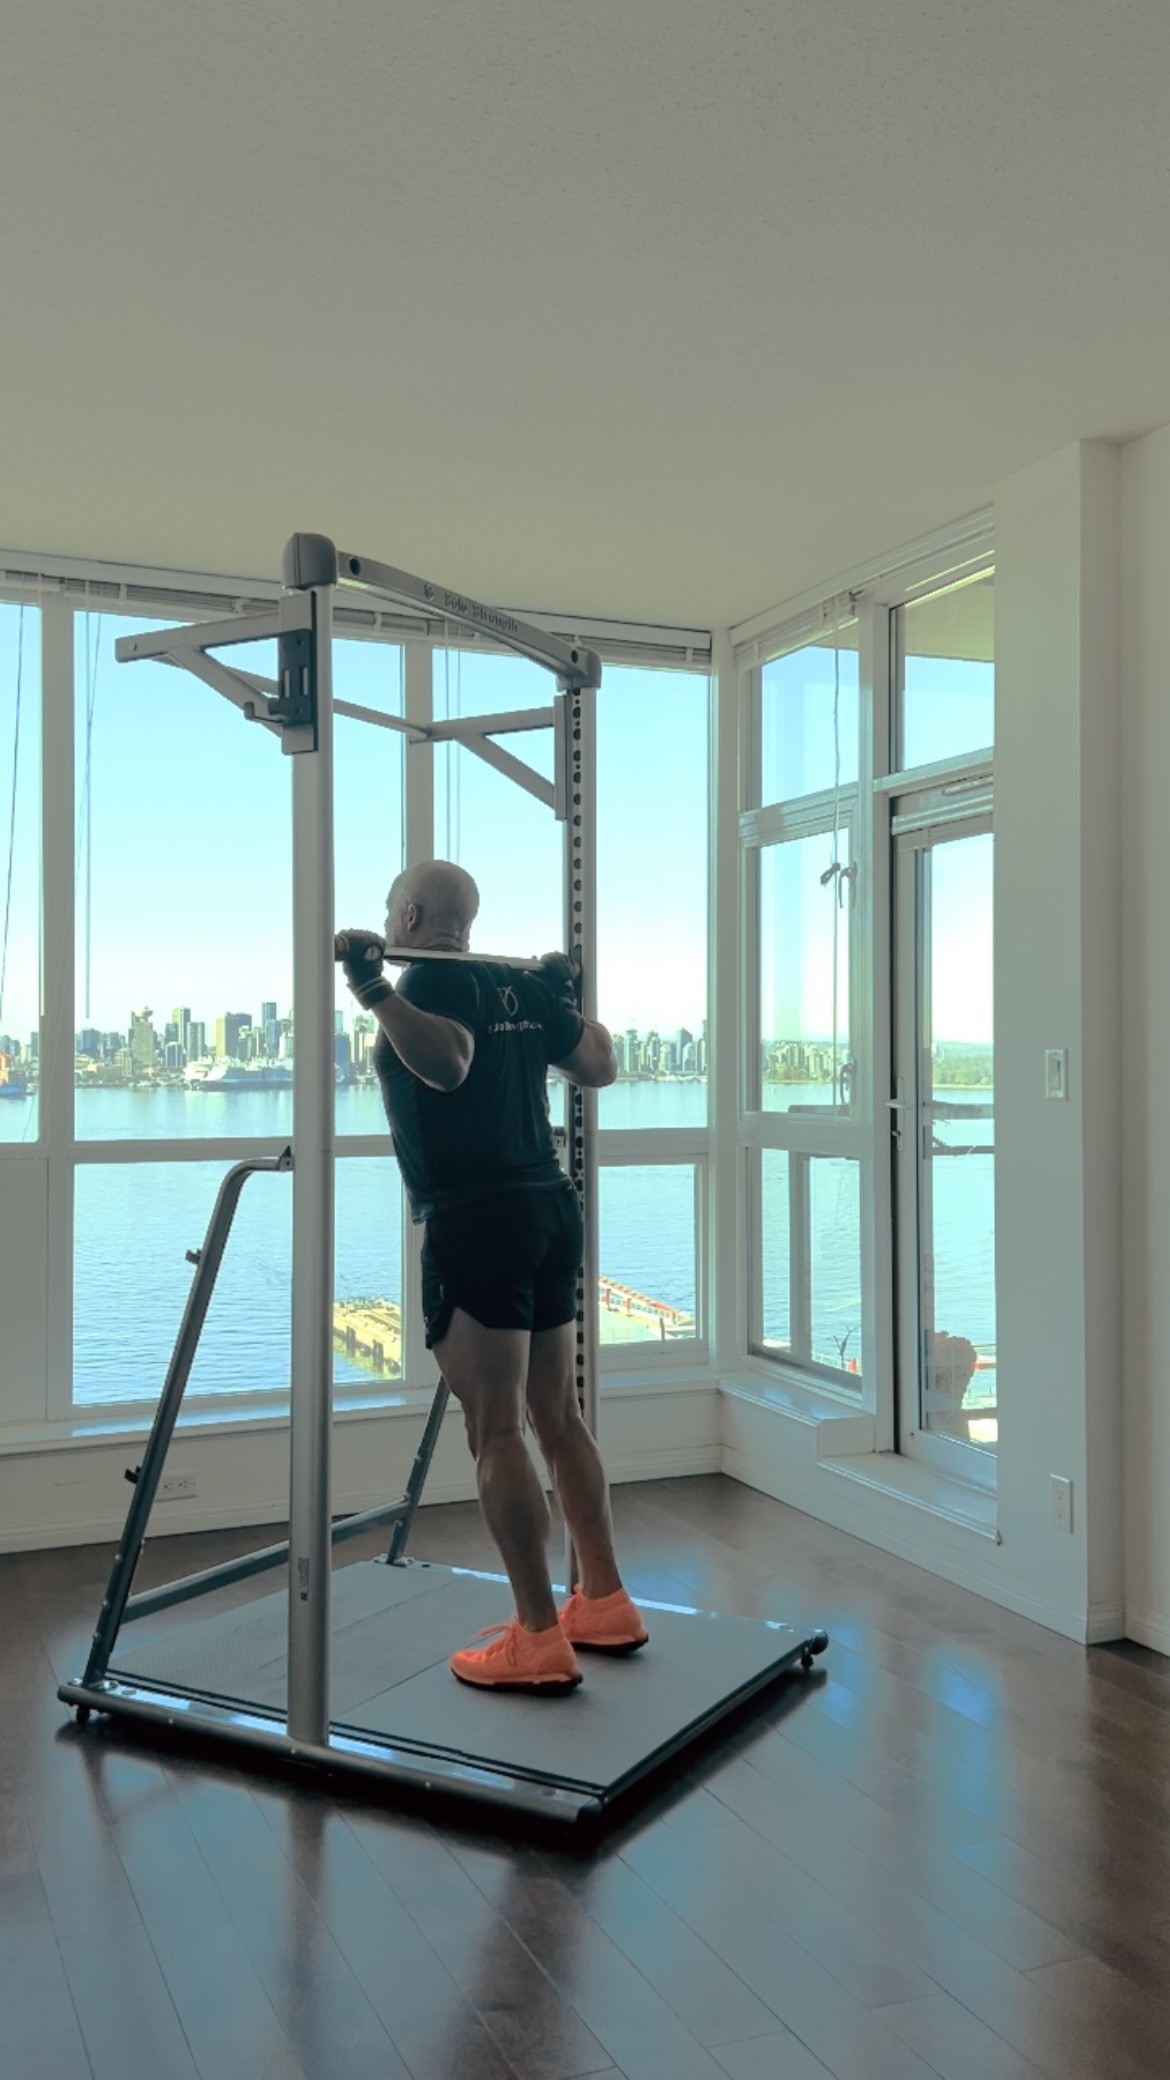 Calf Raises - Bottom- SoloStrength speedfit home gym exercise equipment free bodyweight calisthenics isometrics stretching workouts